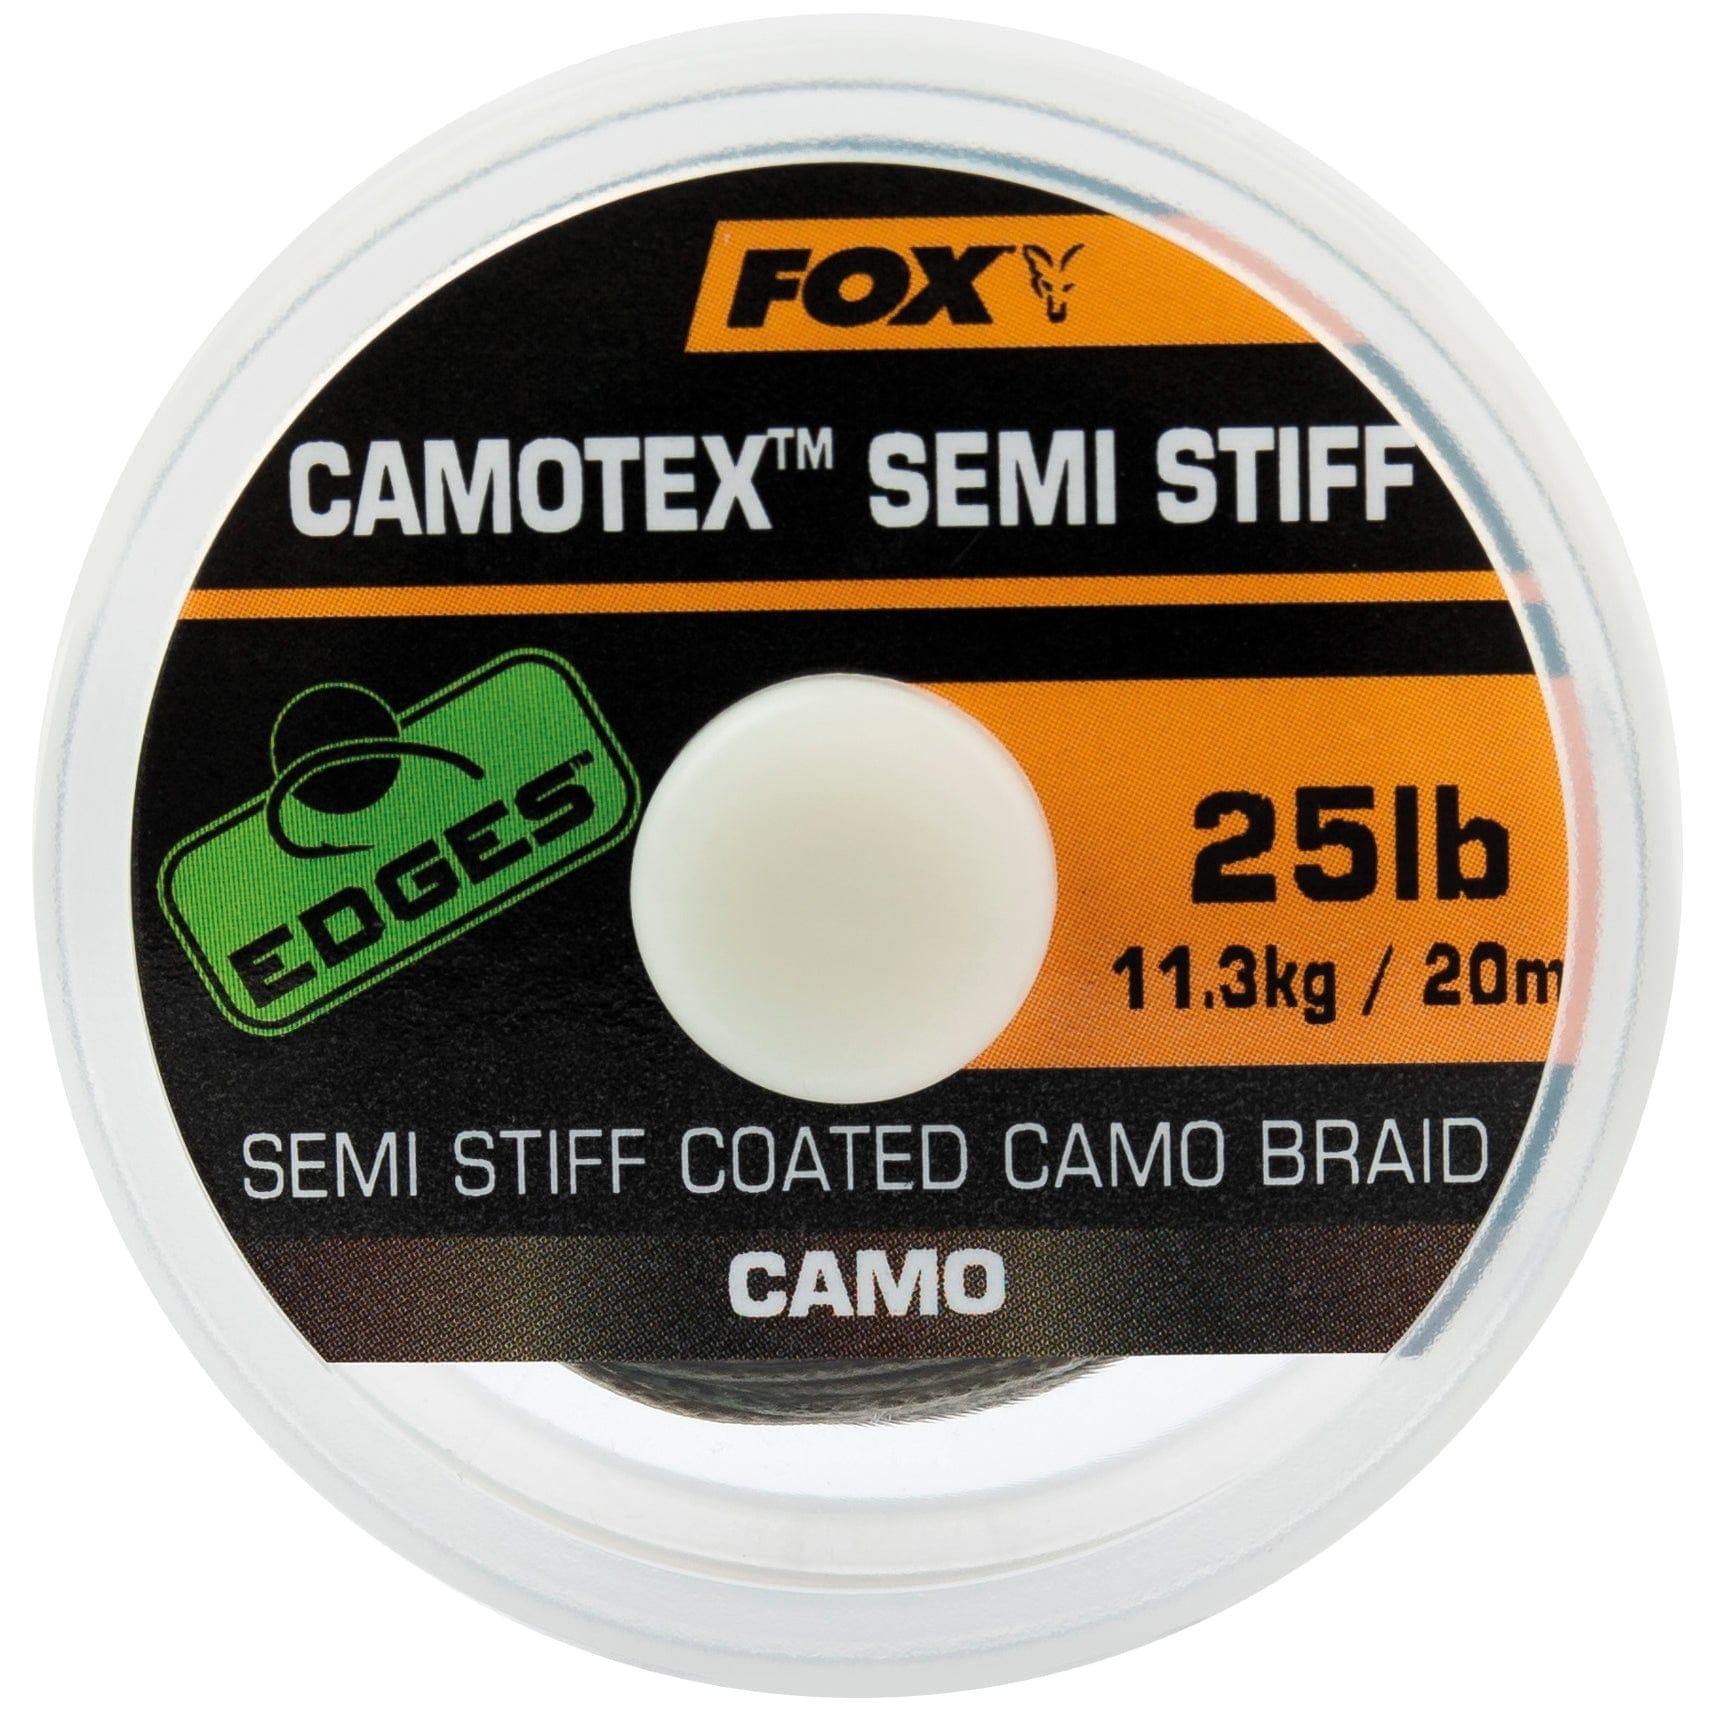 FOX Camotex Coated Camo Braid Soft, Semi & Still options.